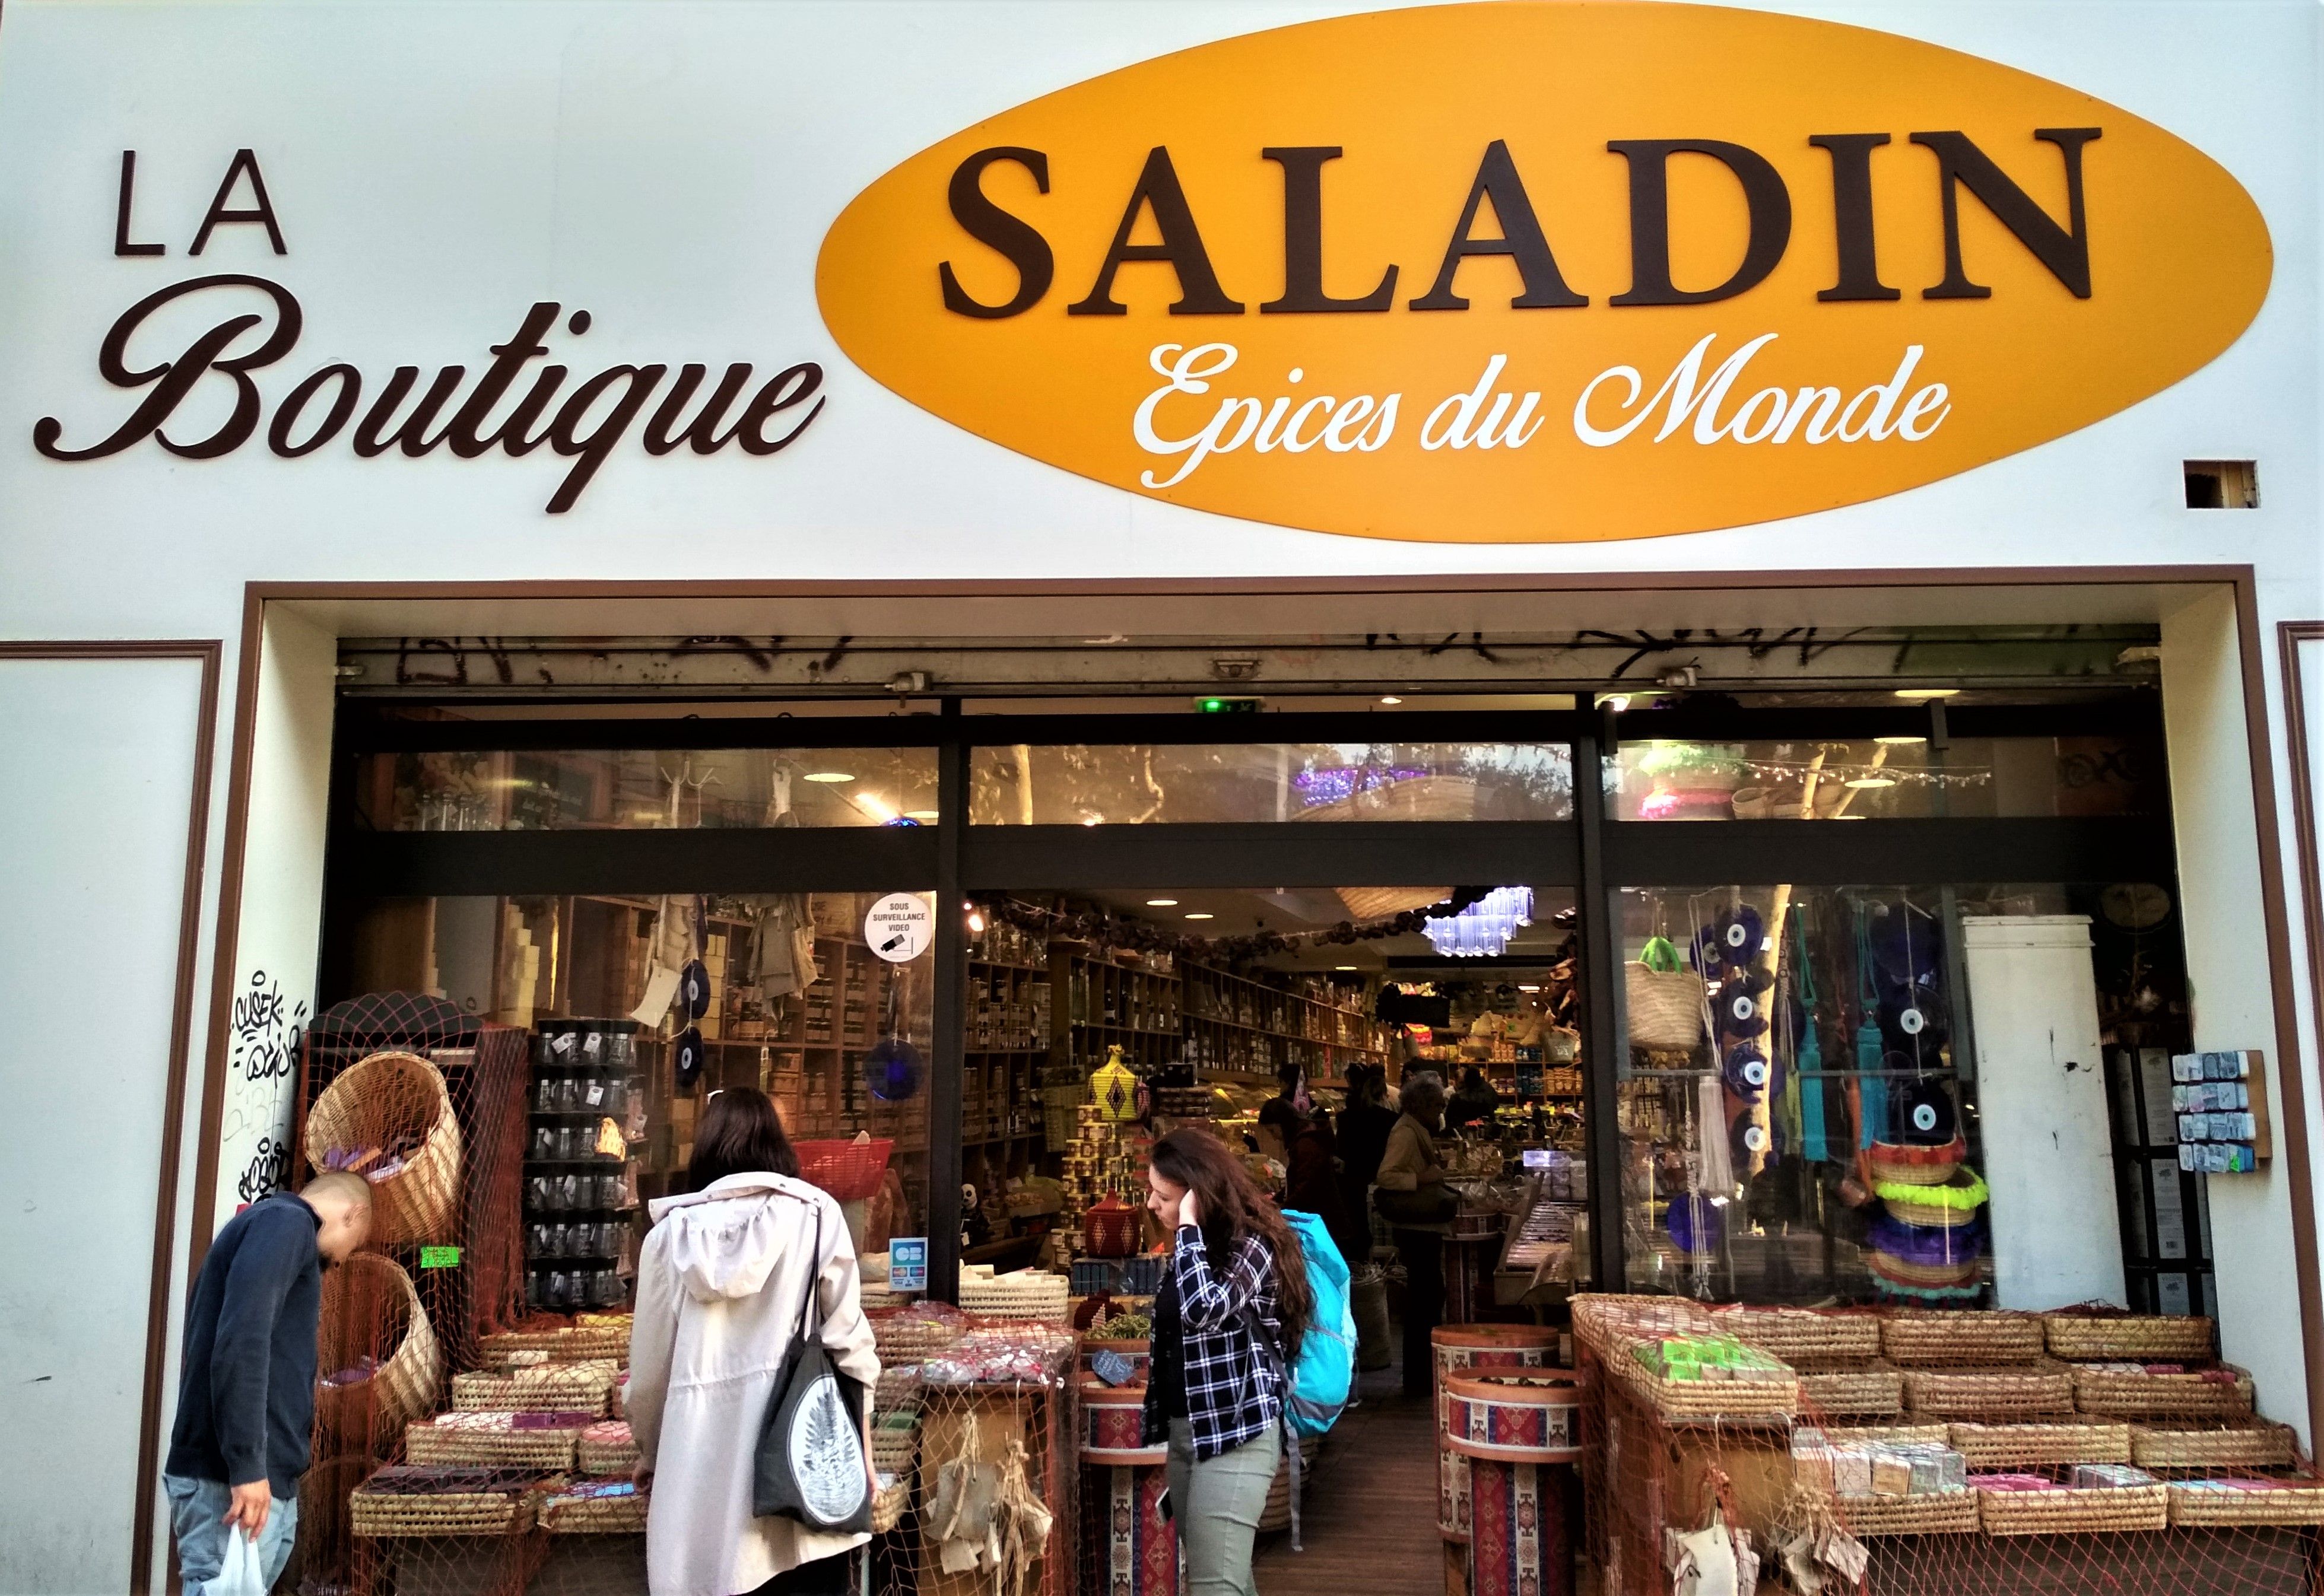 Saladin, Epices du Monde, Boutique, Marseille: All Year